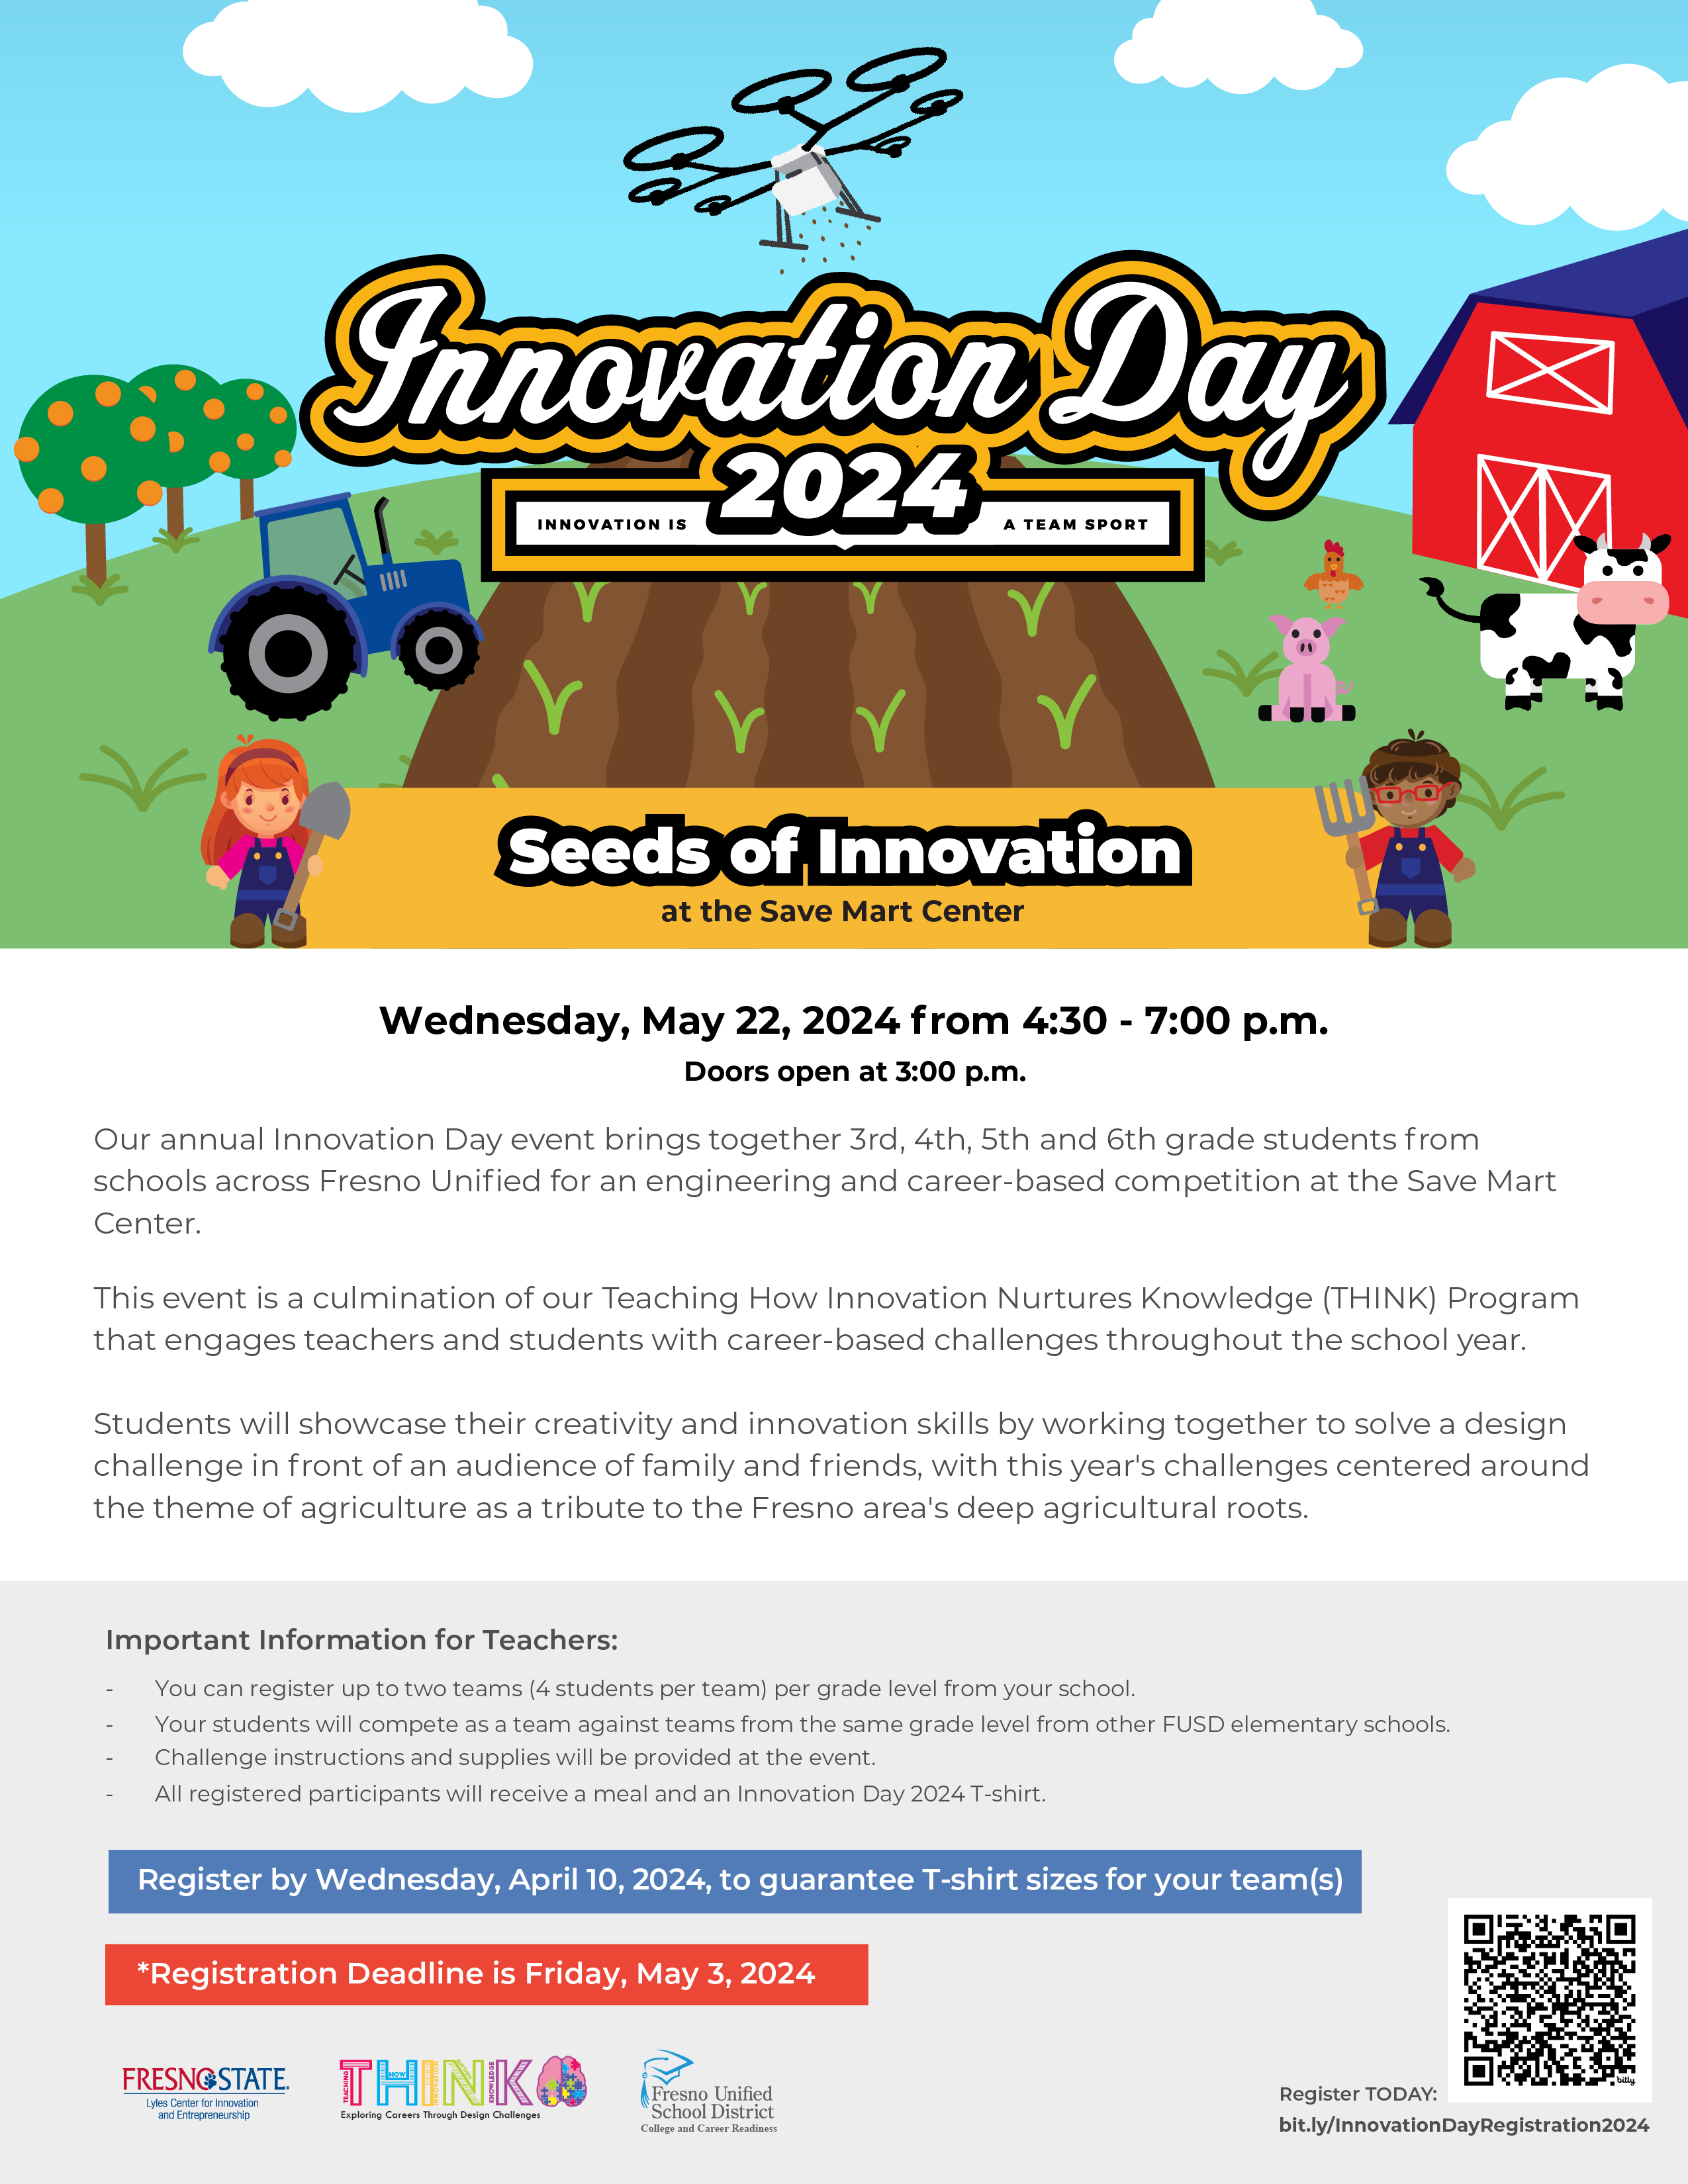 Innovation Day flyer 2023